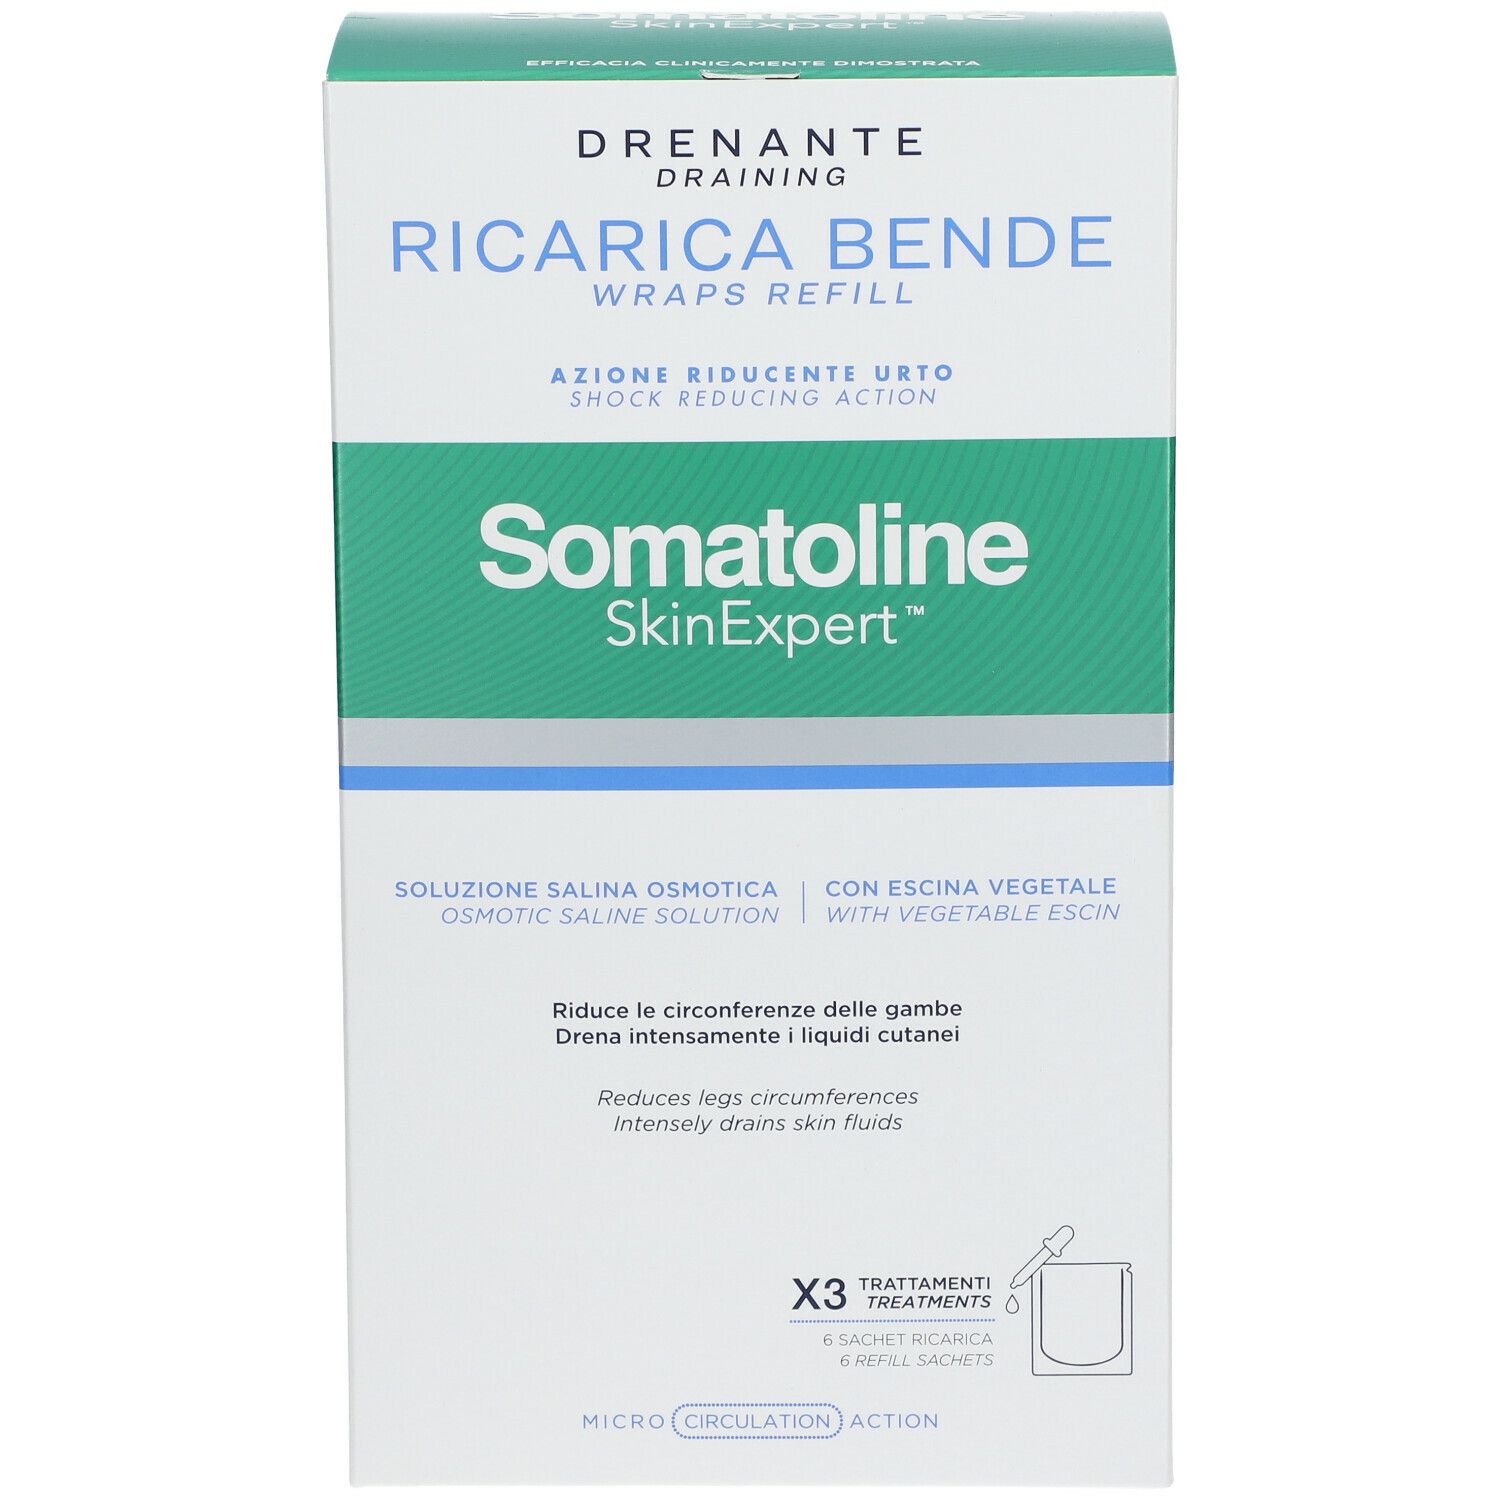 Somatoline SkinExpert™ Drenante Ricarica Bende